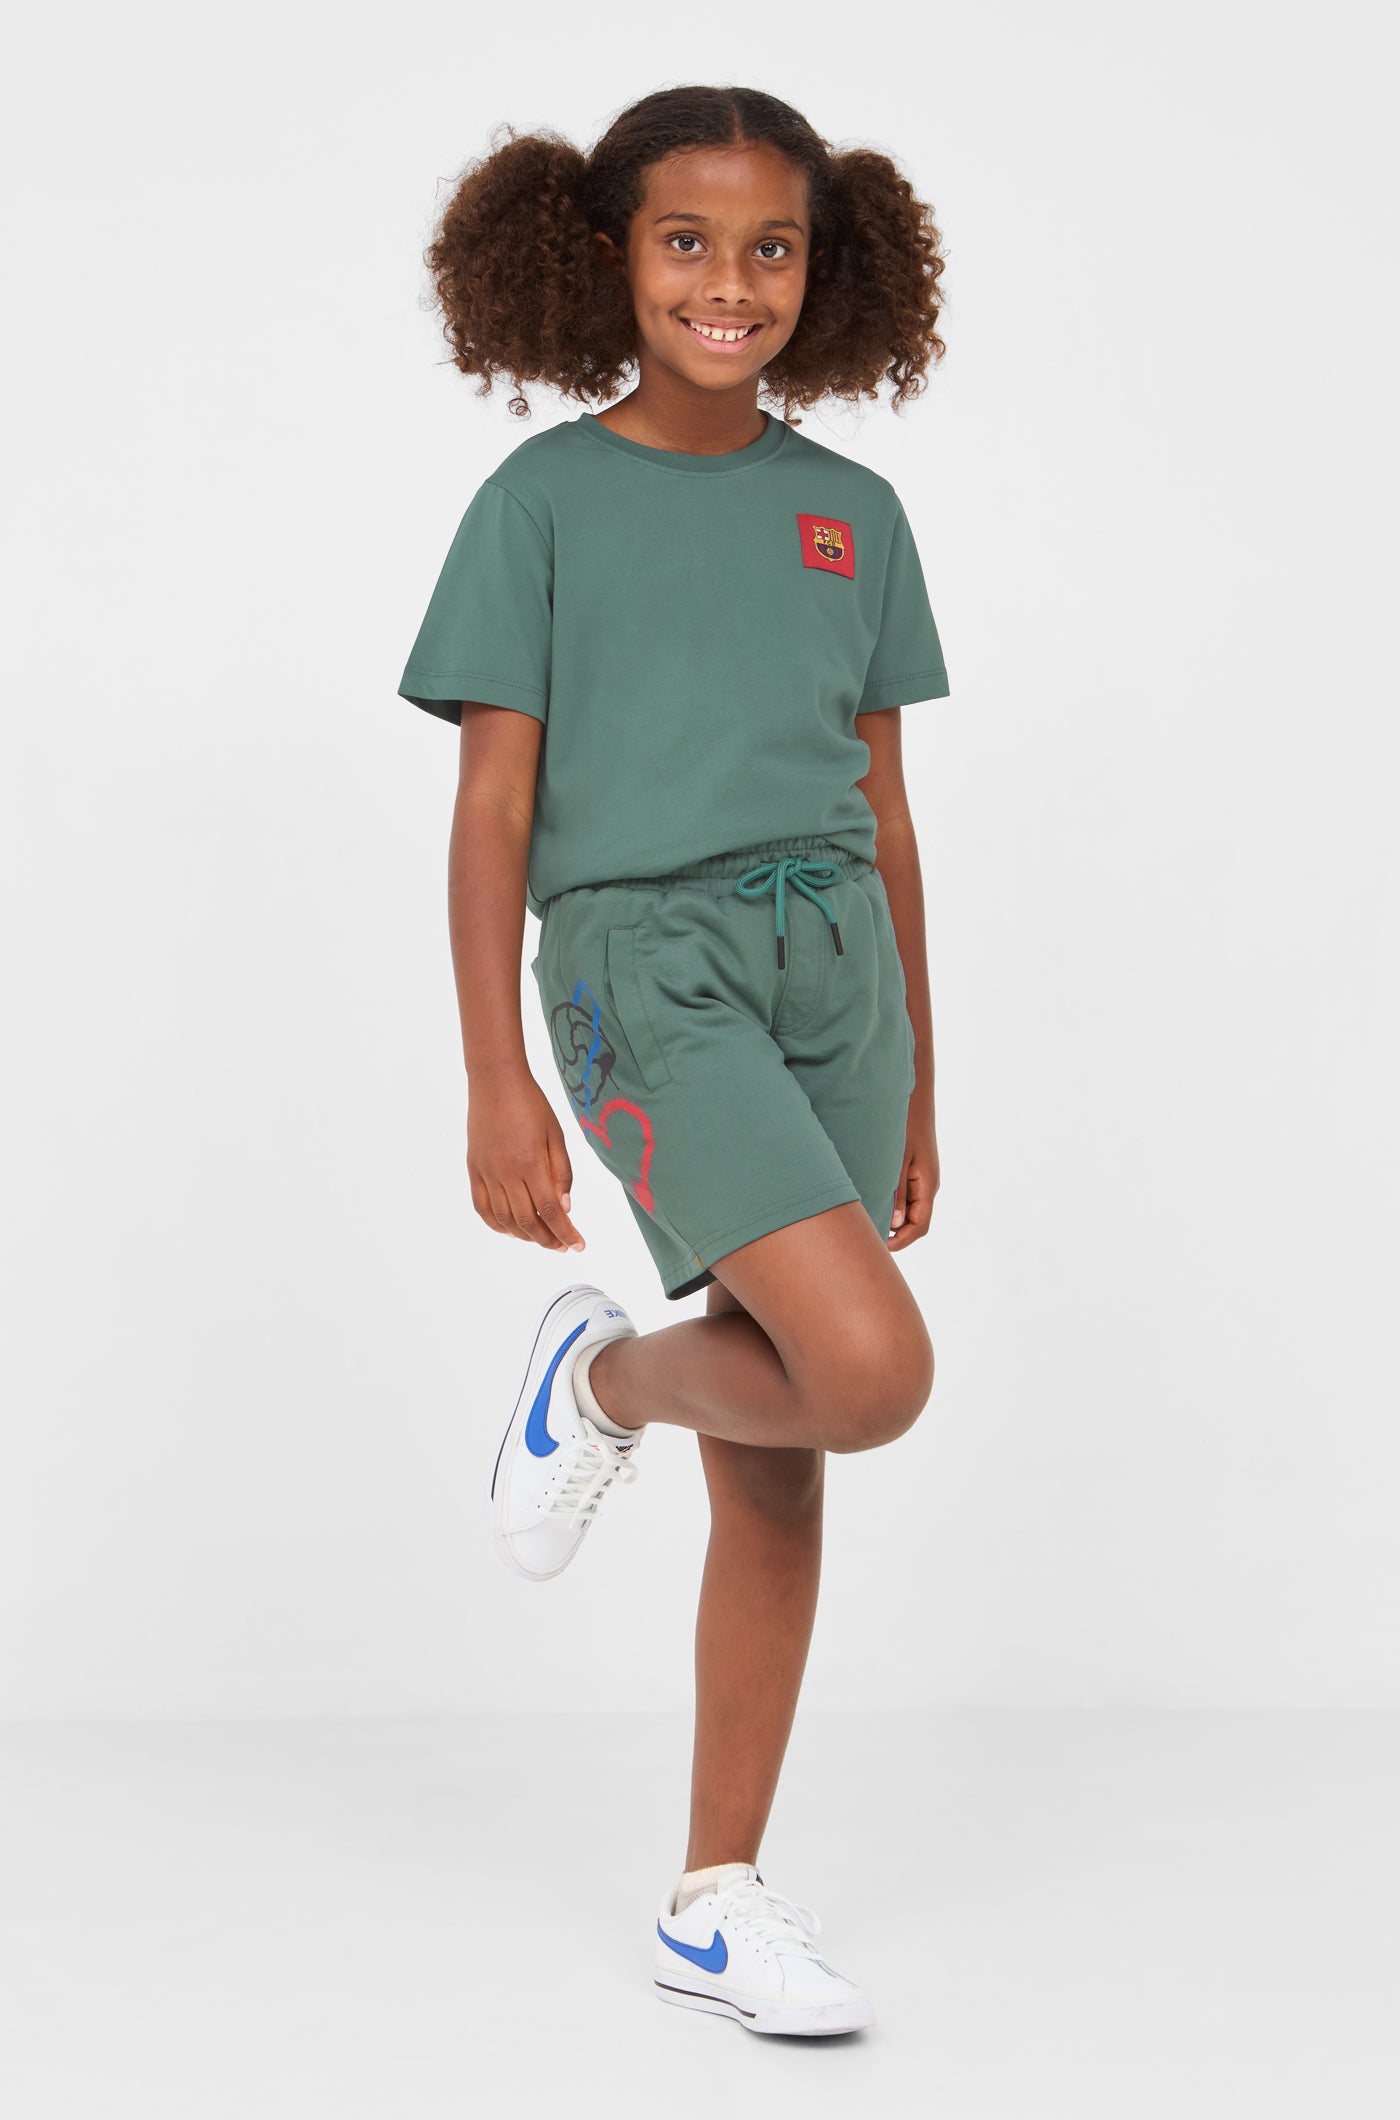 Grüne Shorts mit Barça-Wappen – Junior